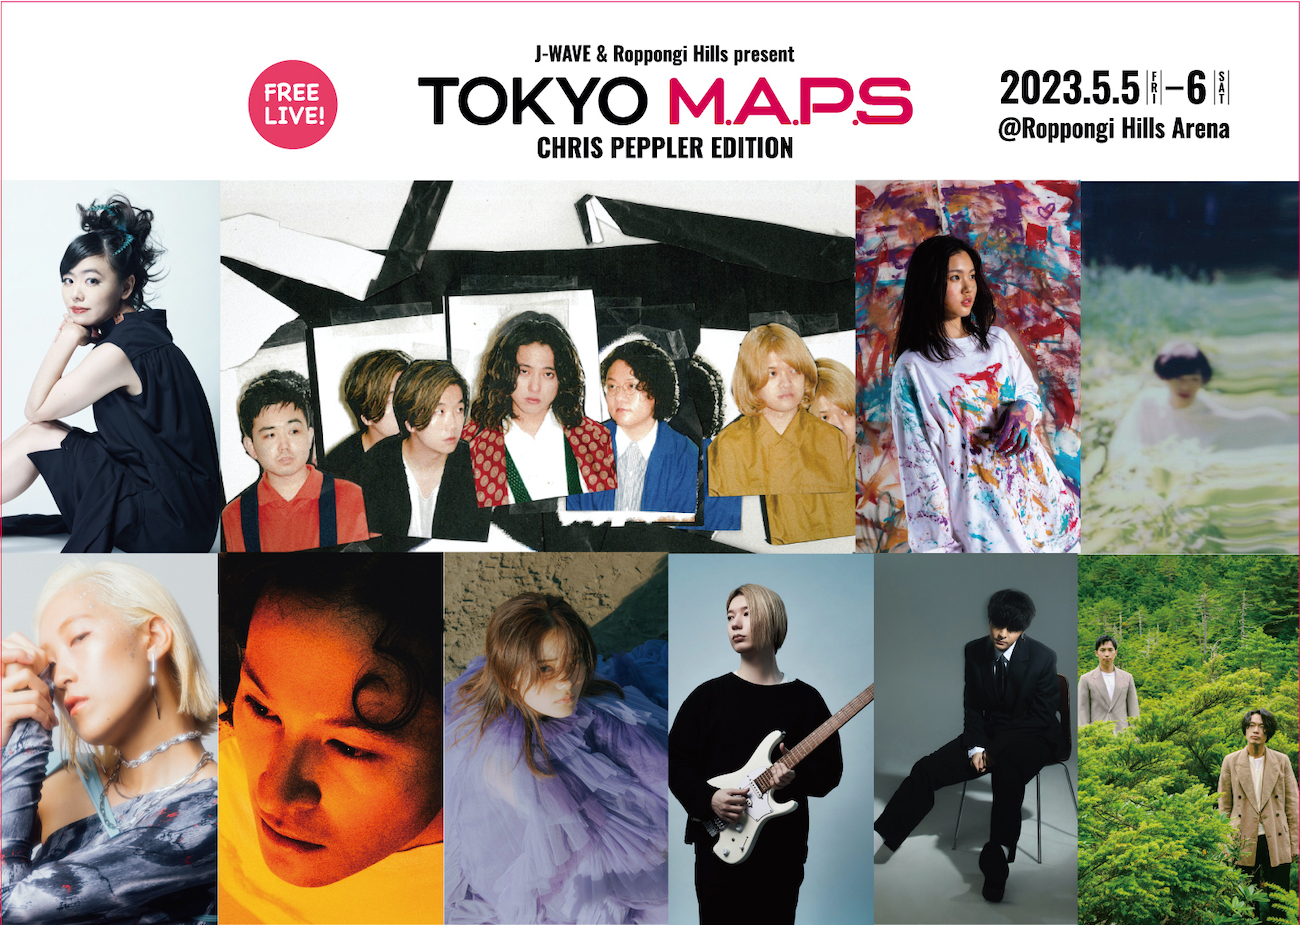 J-WAVE & Roppongi Hills present TOKYO M.A.P.S Chris Peppler EDITION